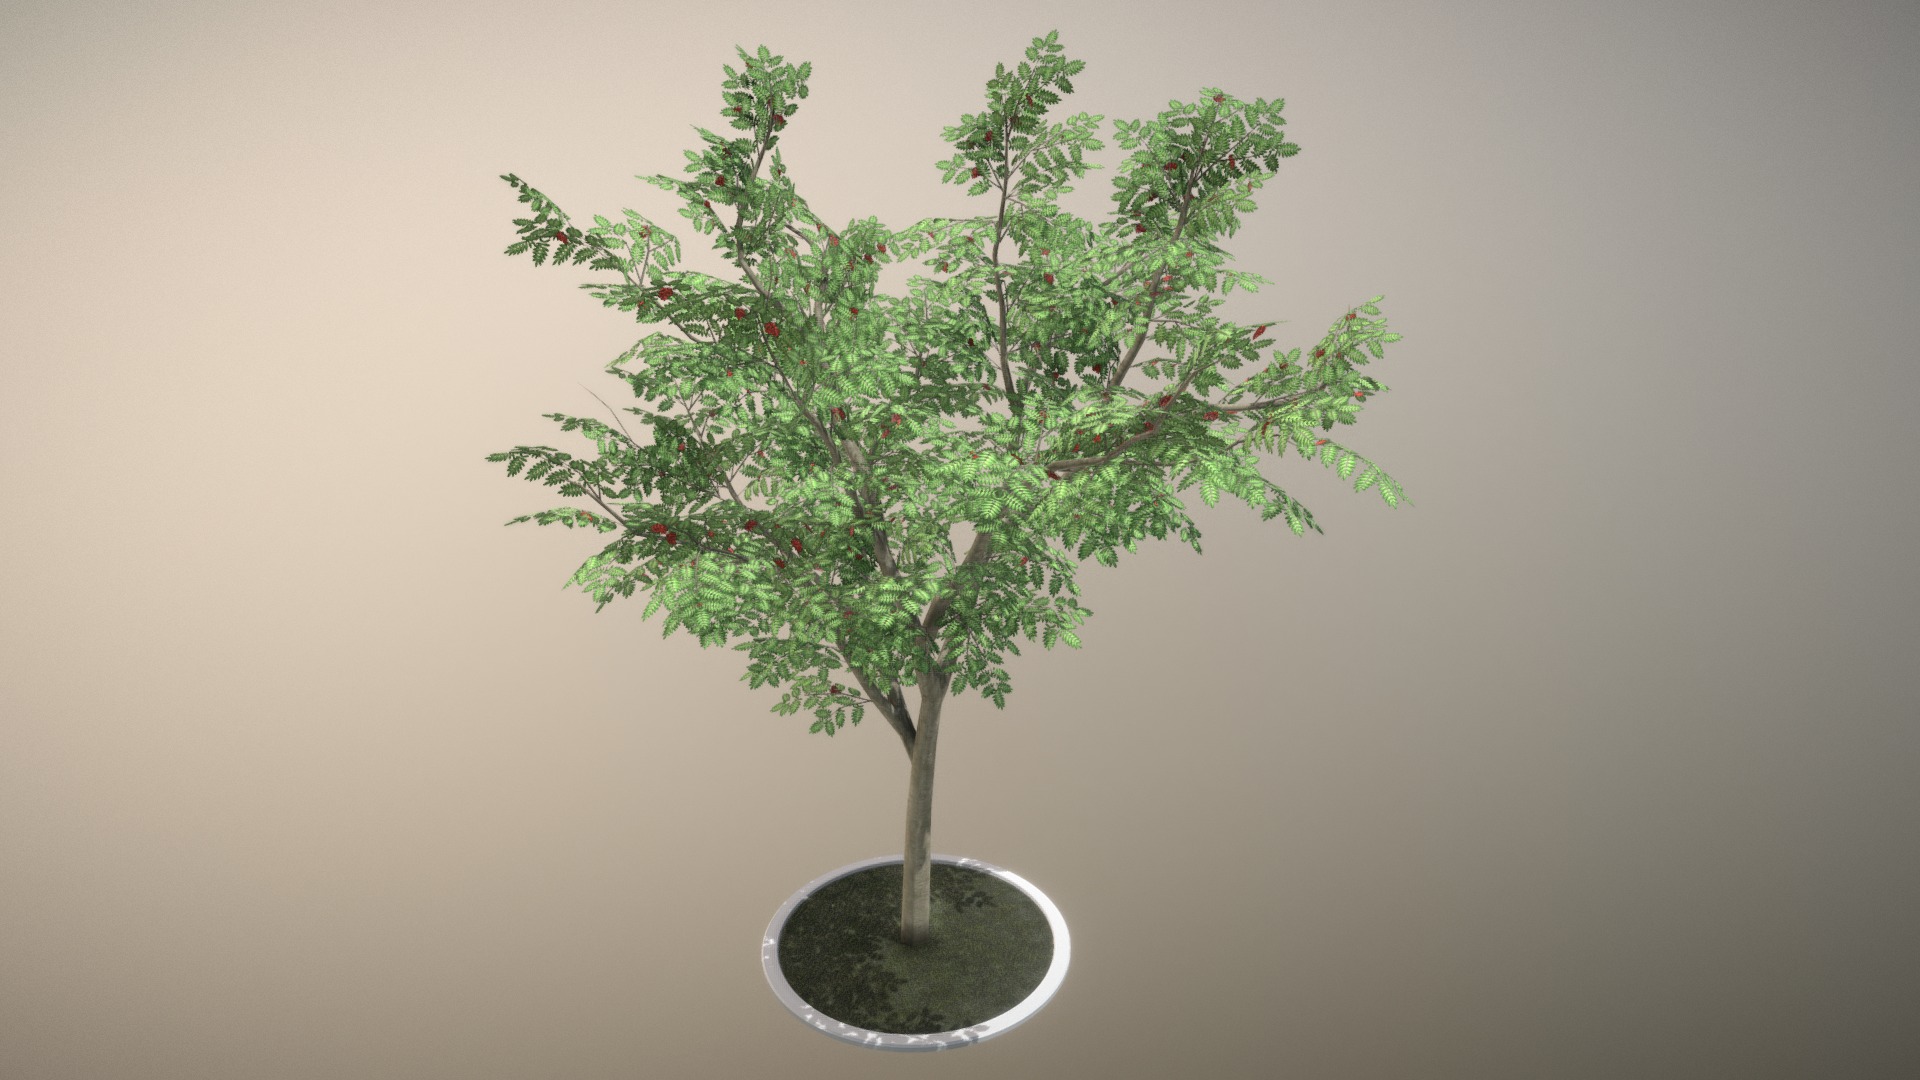 3D model Rowan Tree – Sorbus-Aucuparia – 12m – Summer - This is a 3D model of the Rowan Tree - Sorbus-Aucuparia - 12m - Summer. The 3D model is about a tree in a pot.